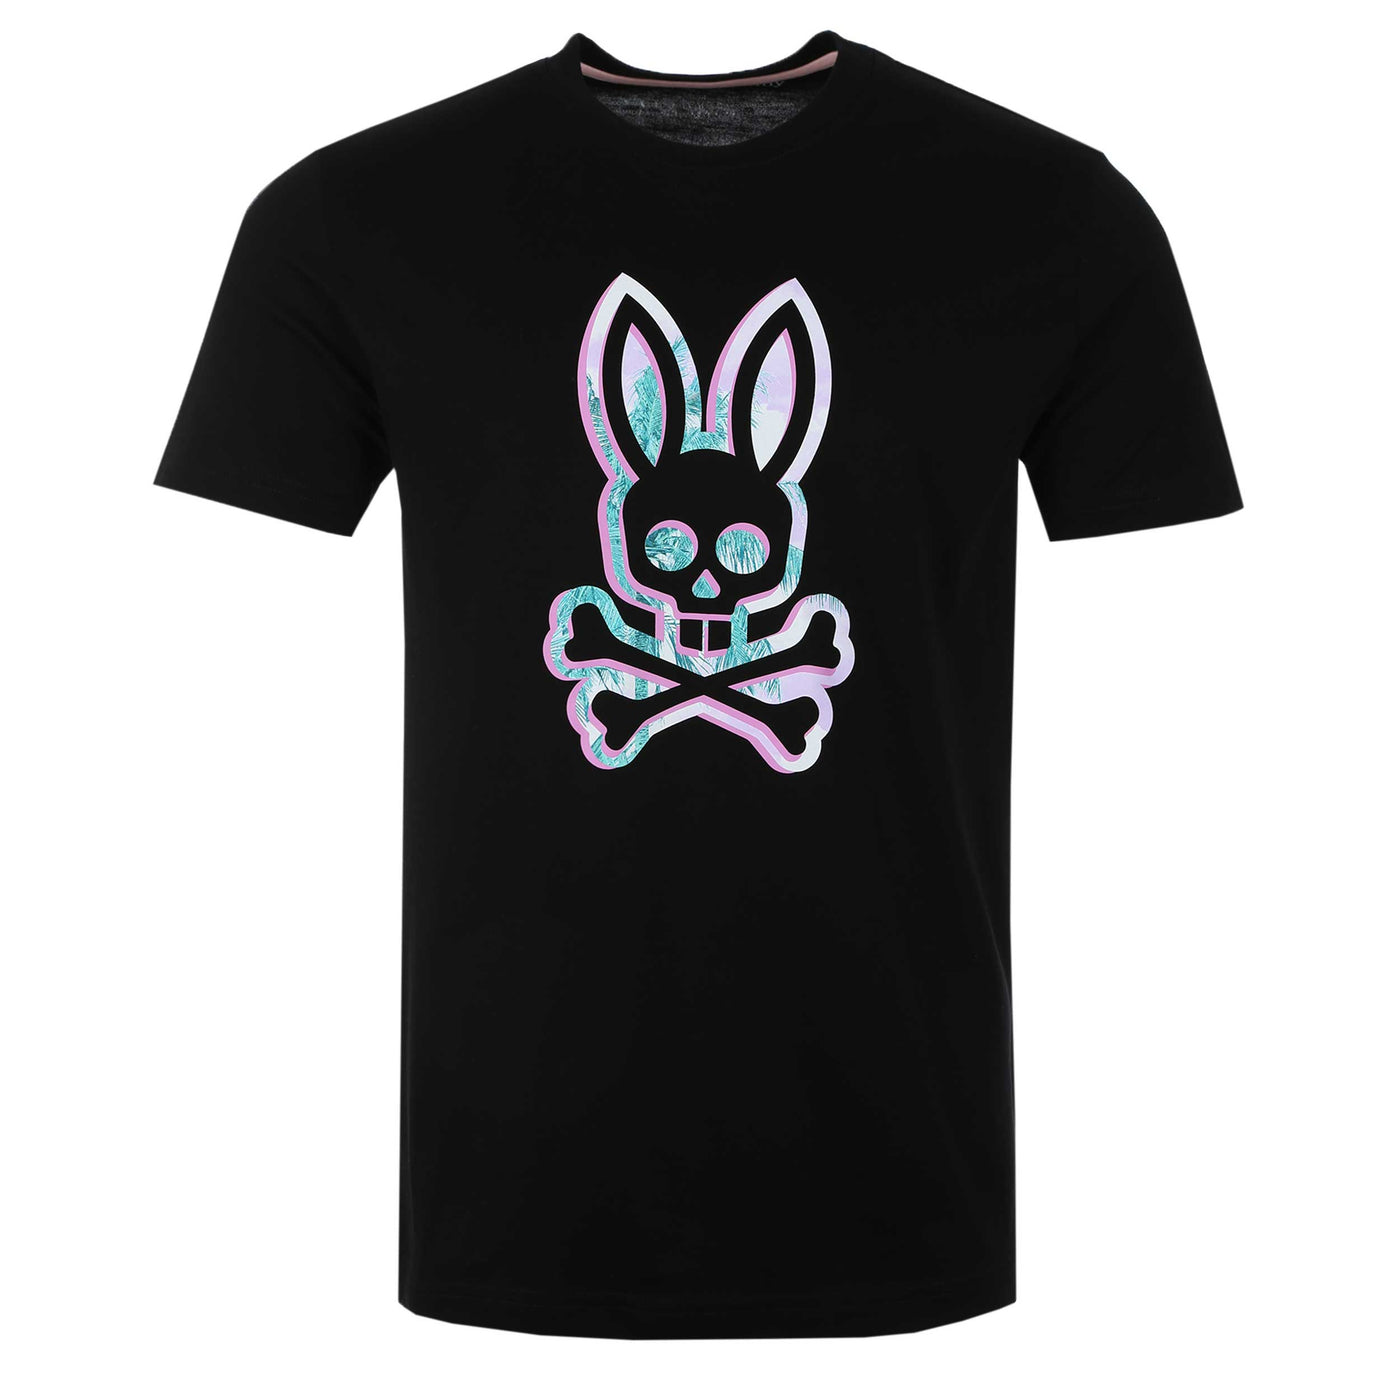 Psycho Bunny Leonard Graphic T-Shirt in Black